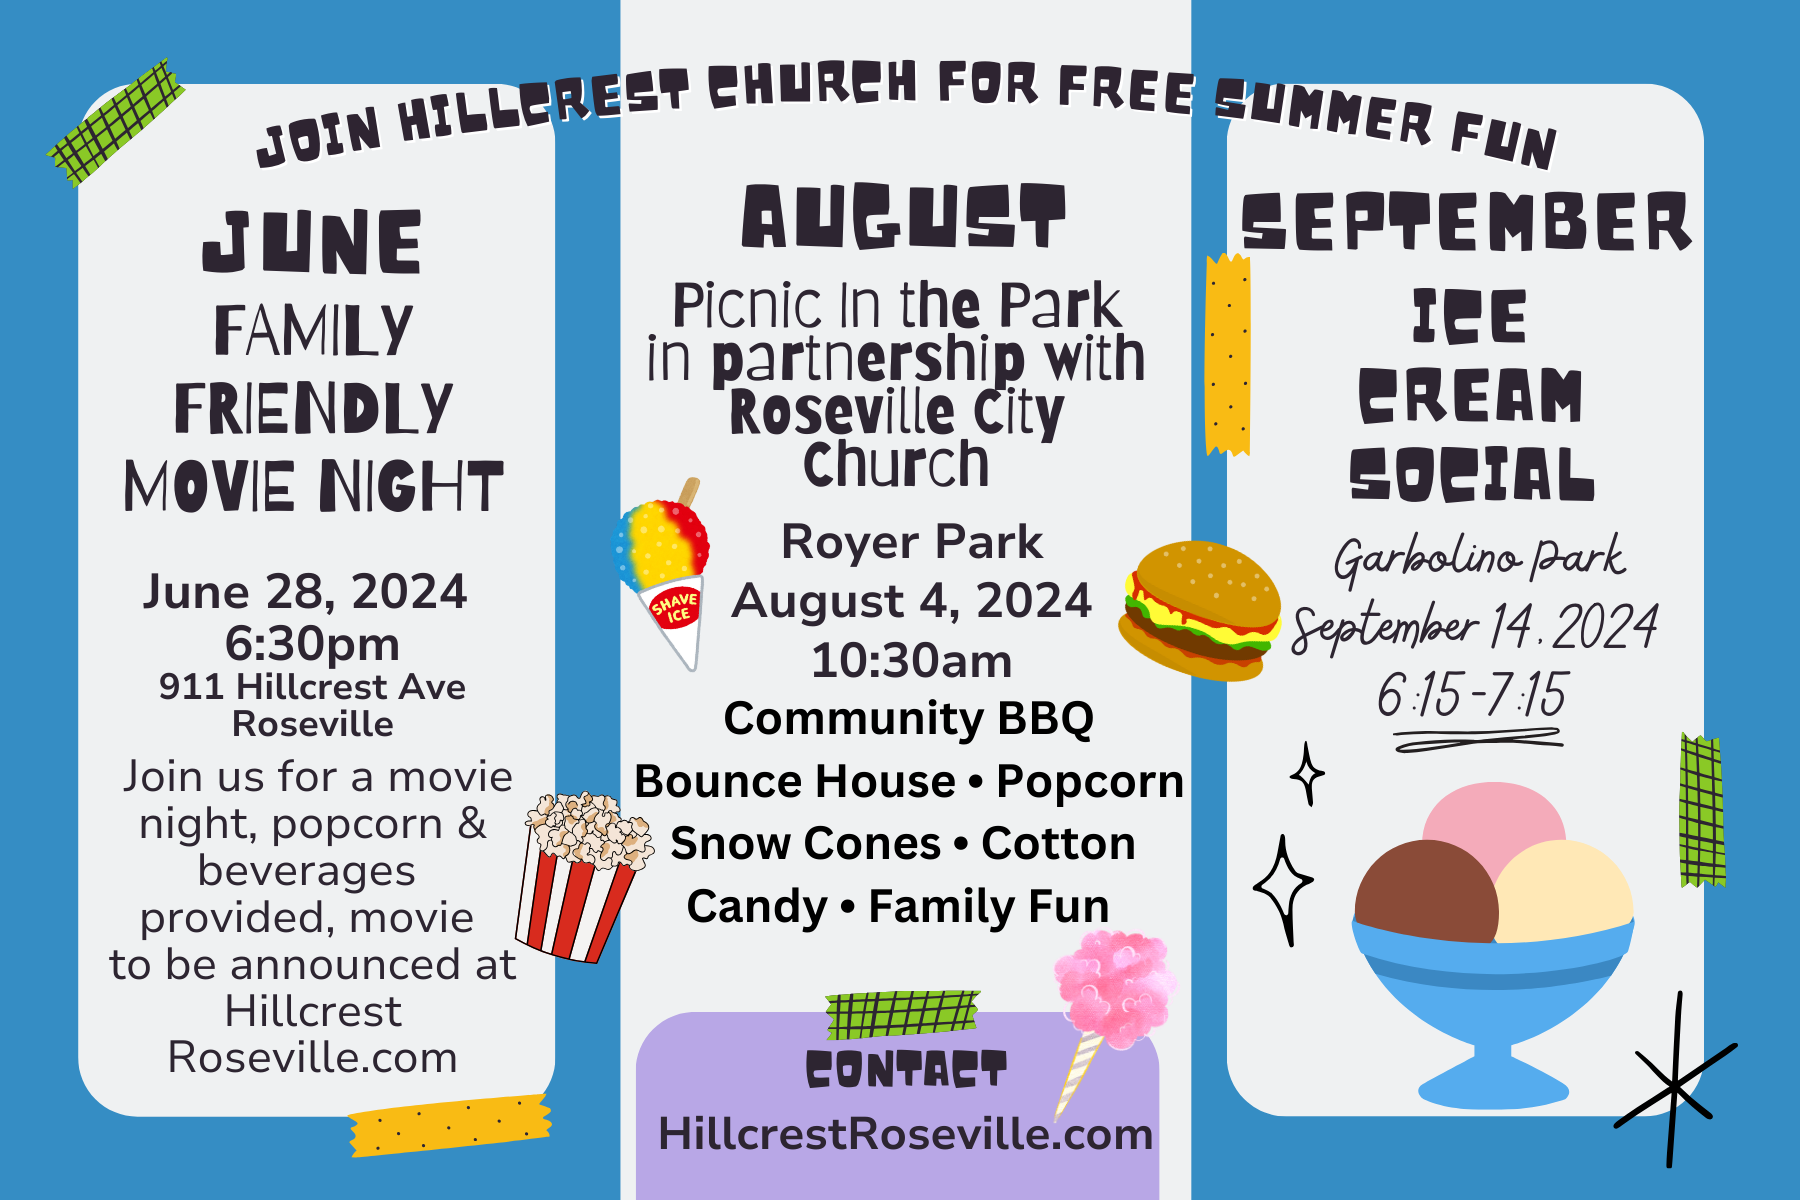 Free Summer Fun Flyer